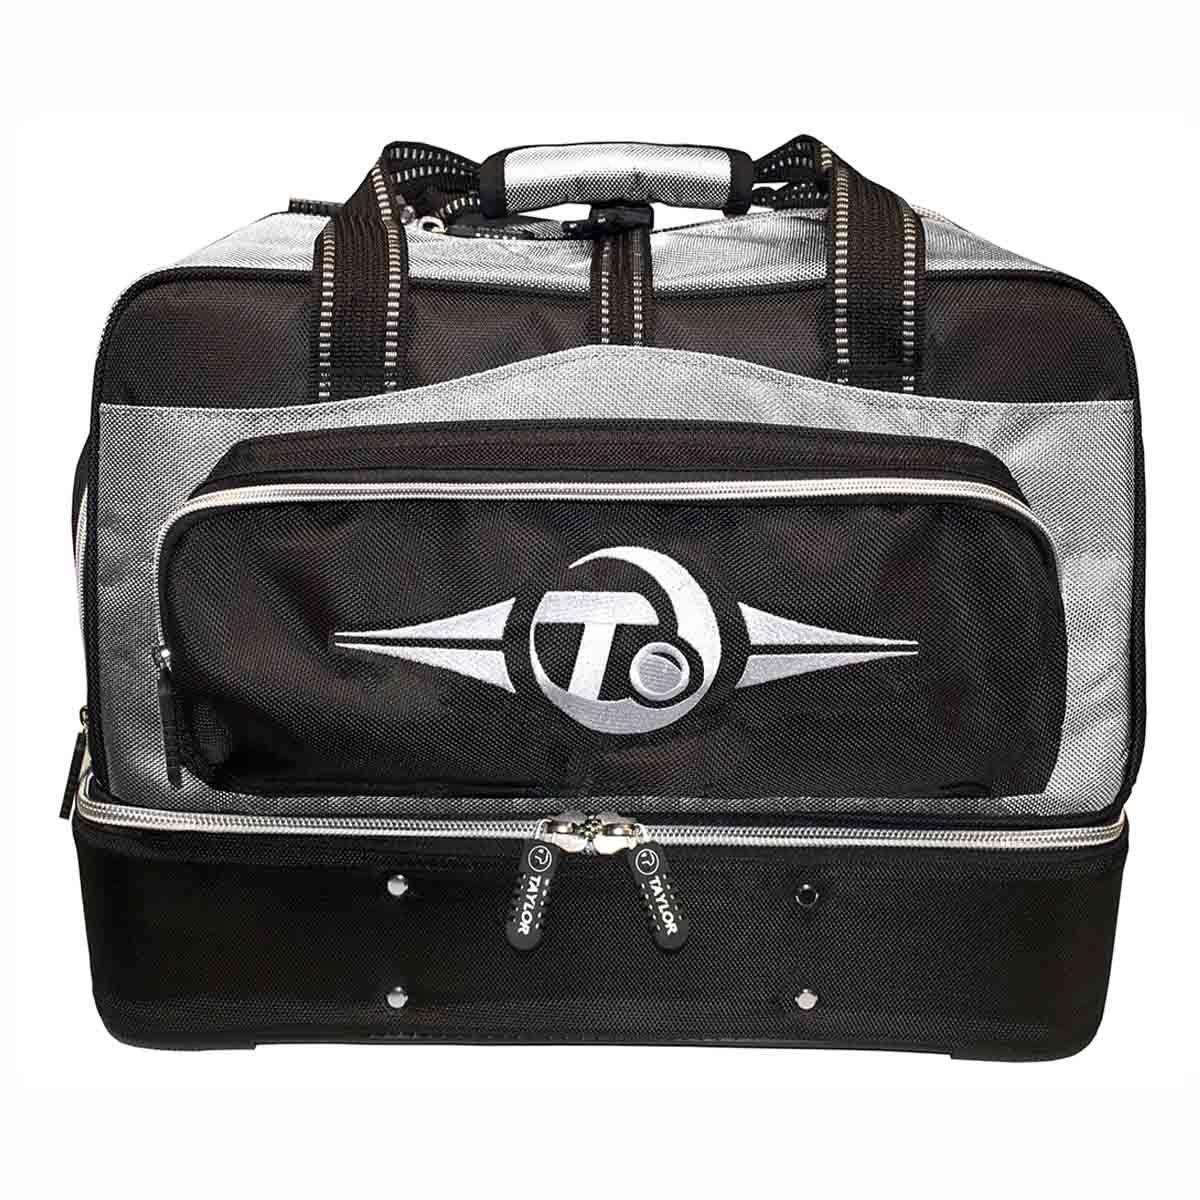 Taylor Bowls Midi Bowling Sports Bag